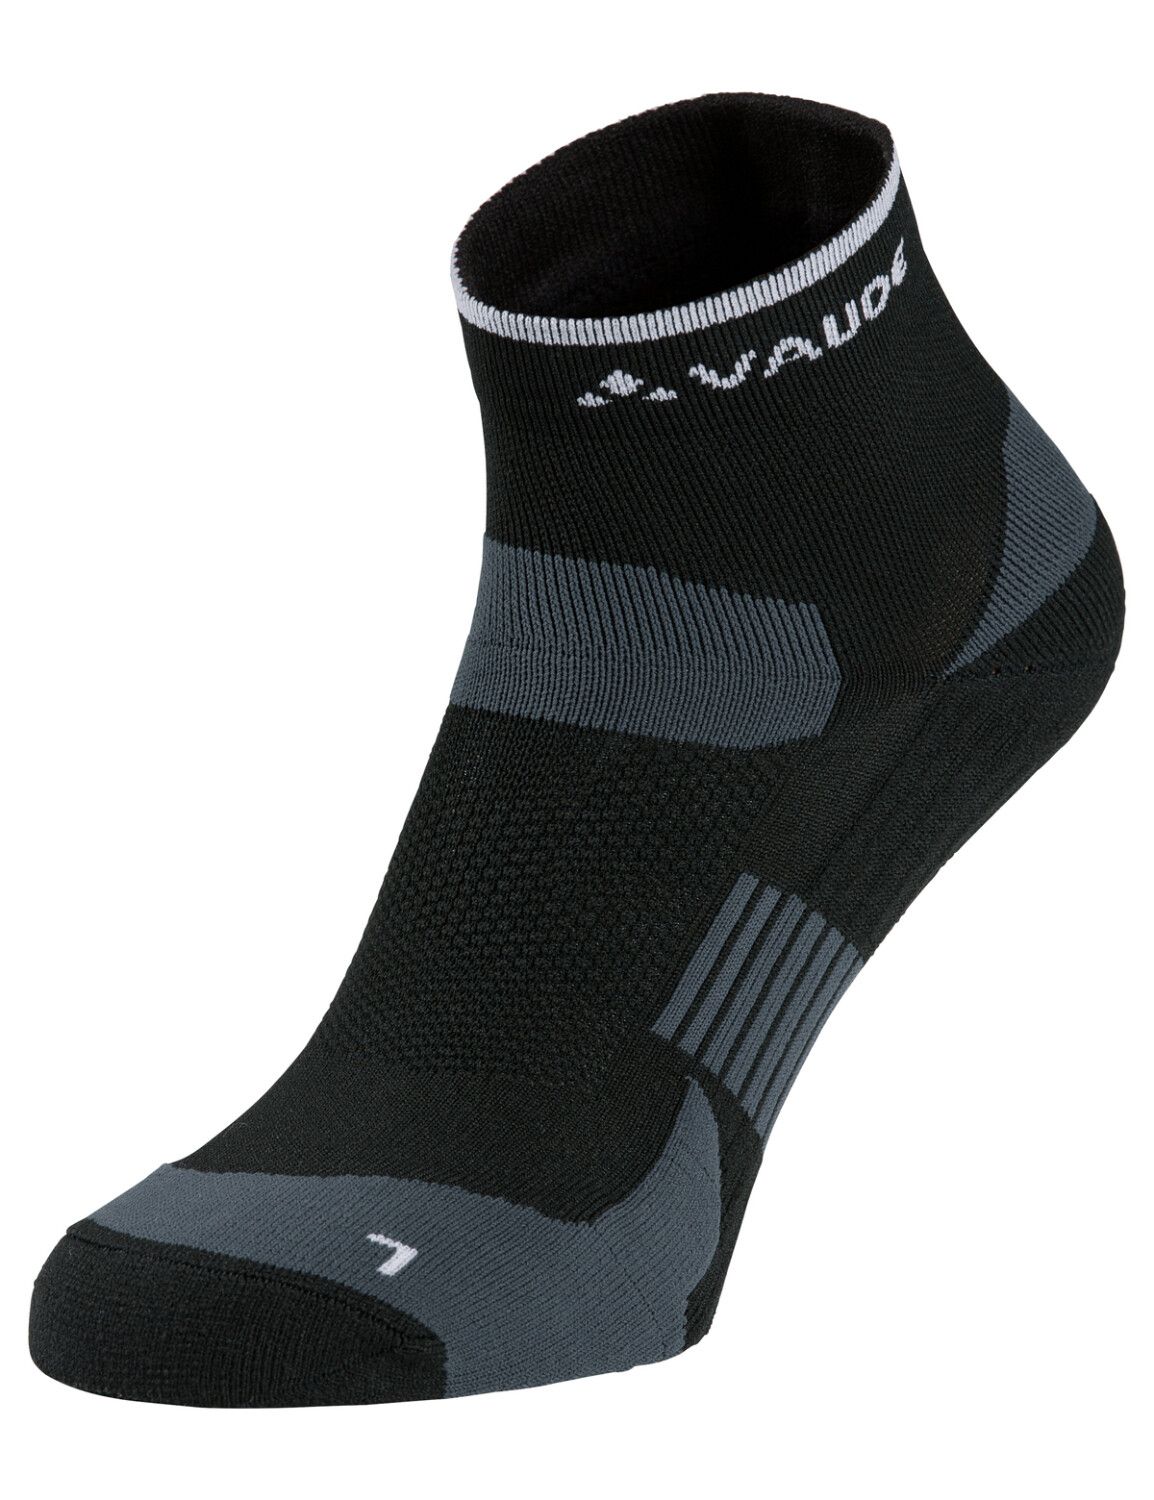 VAUDE Bike Socks Short (Bild 8)